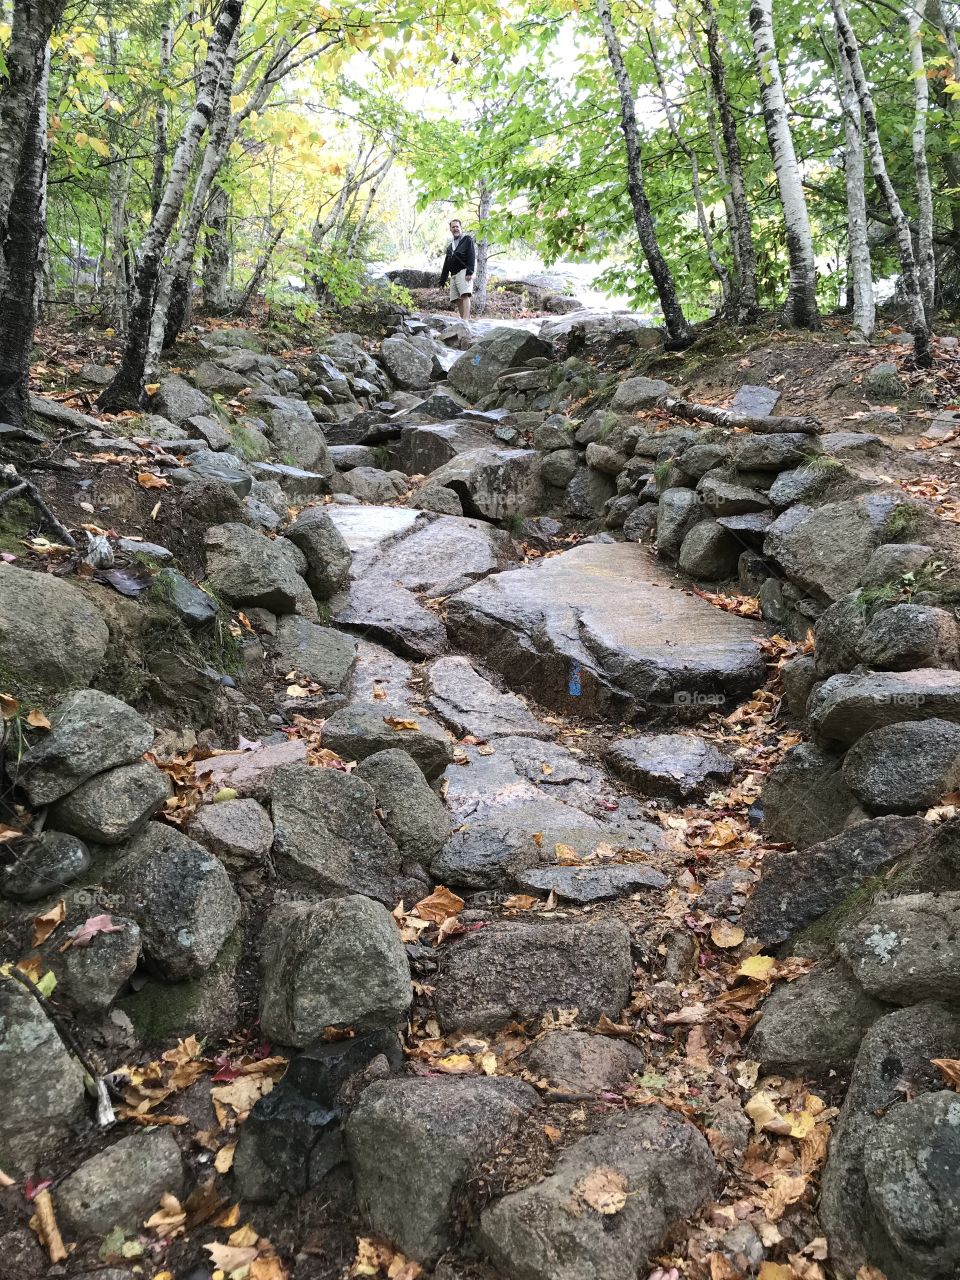 Up a rocky path